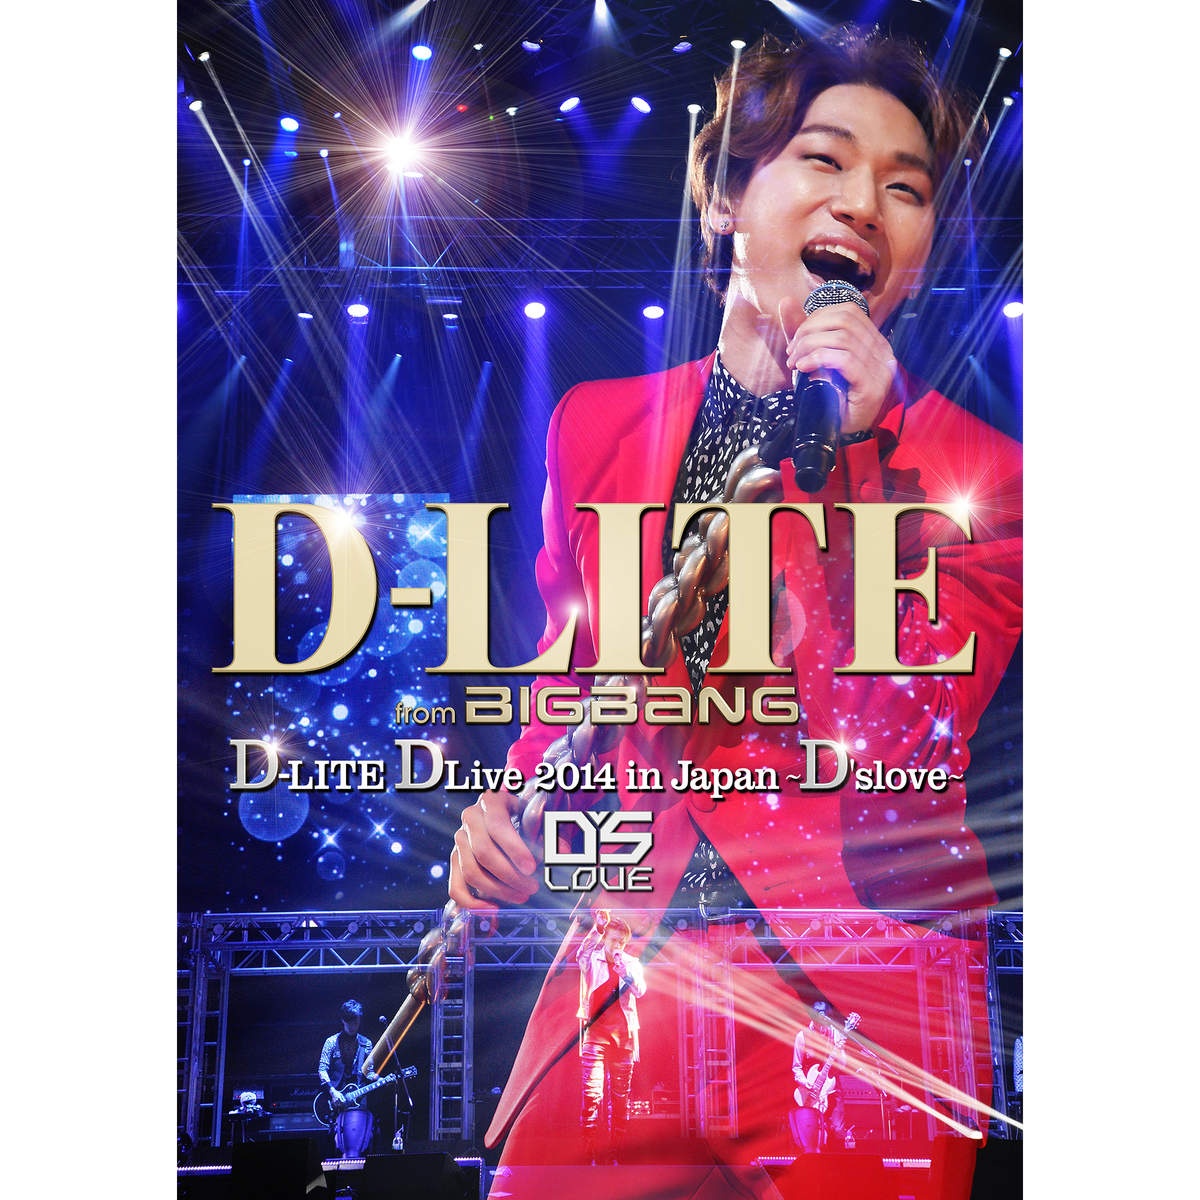 Hello DLITE DLive 2014 in Japan D' slove